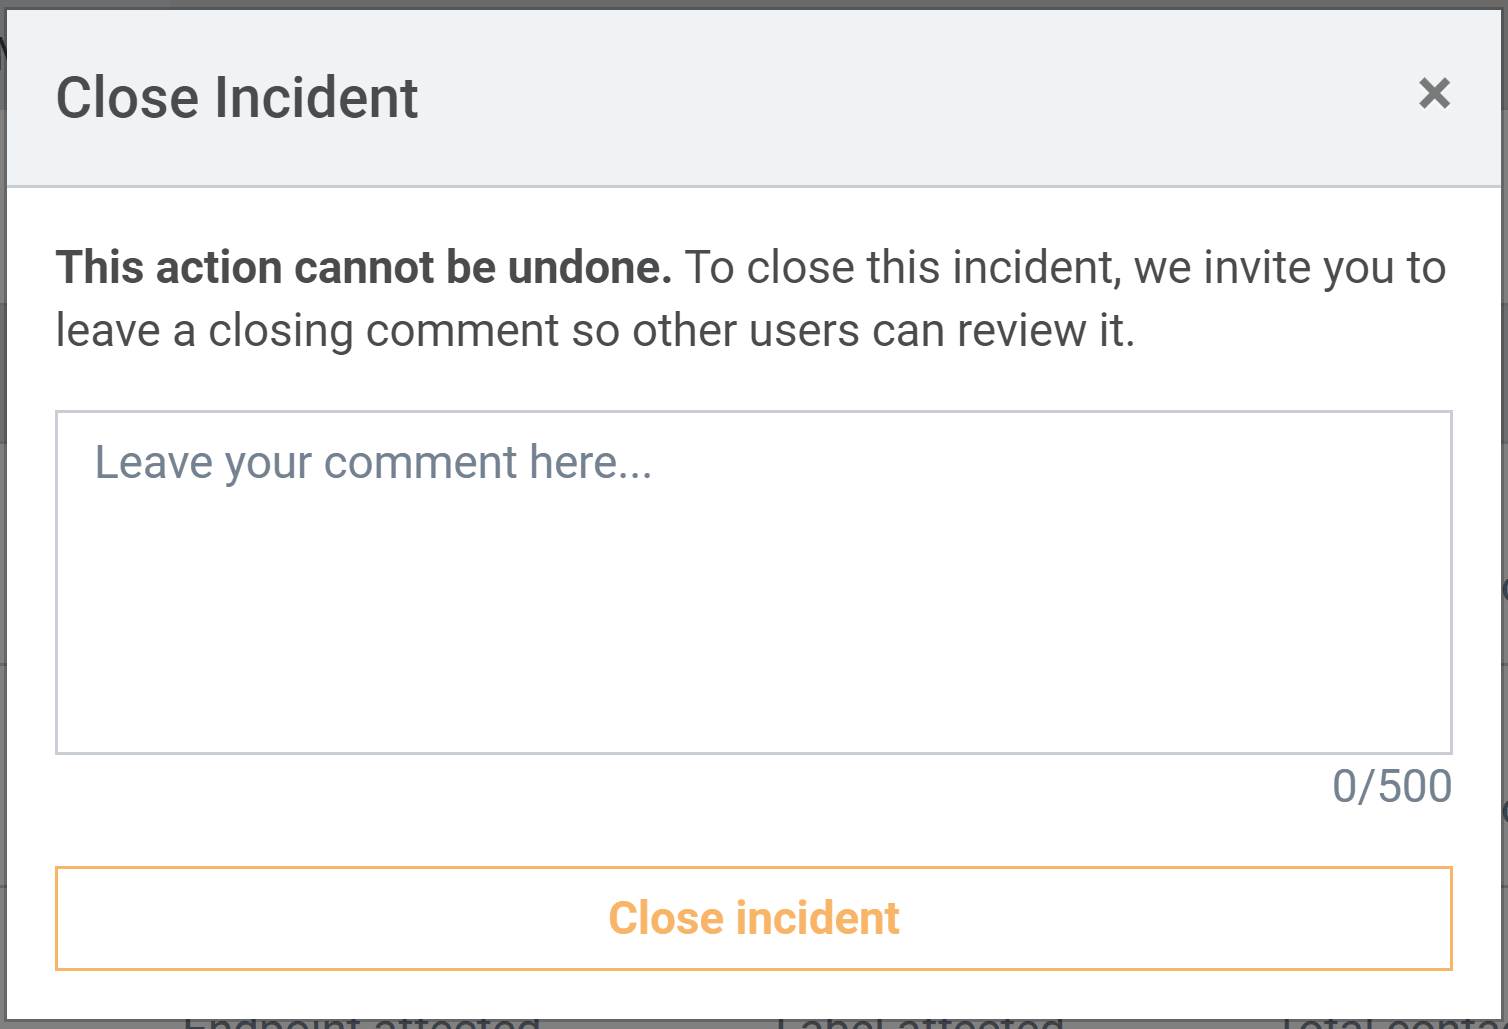 Closing an incident